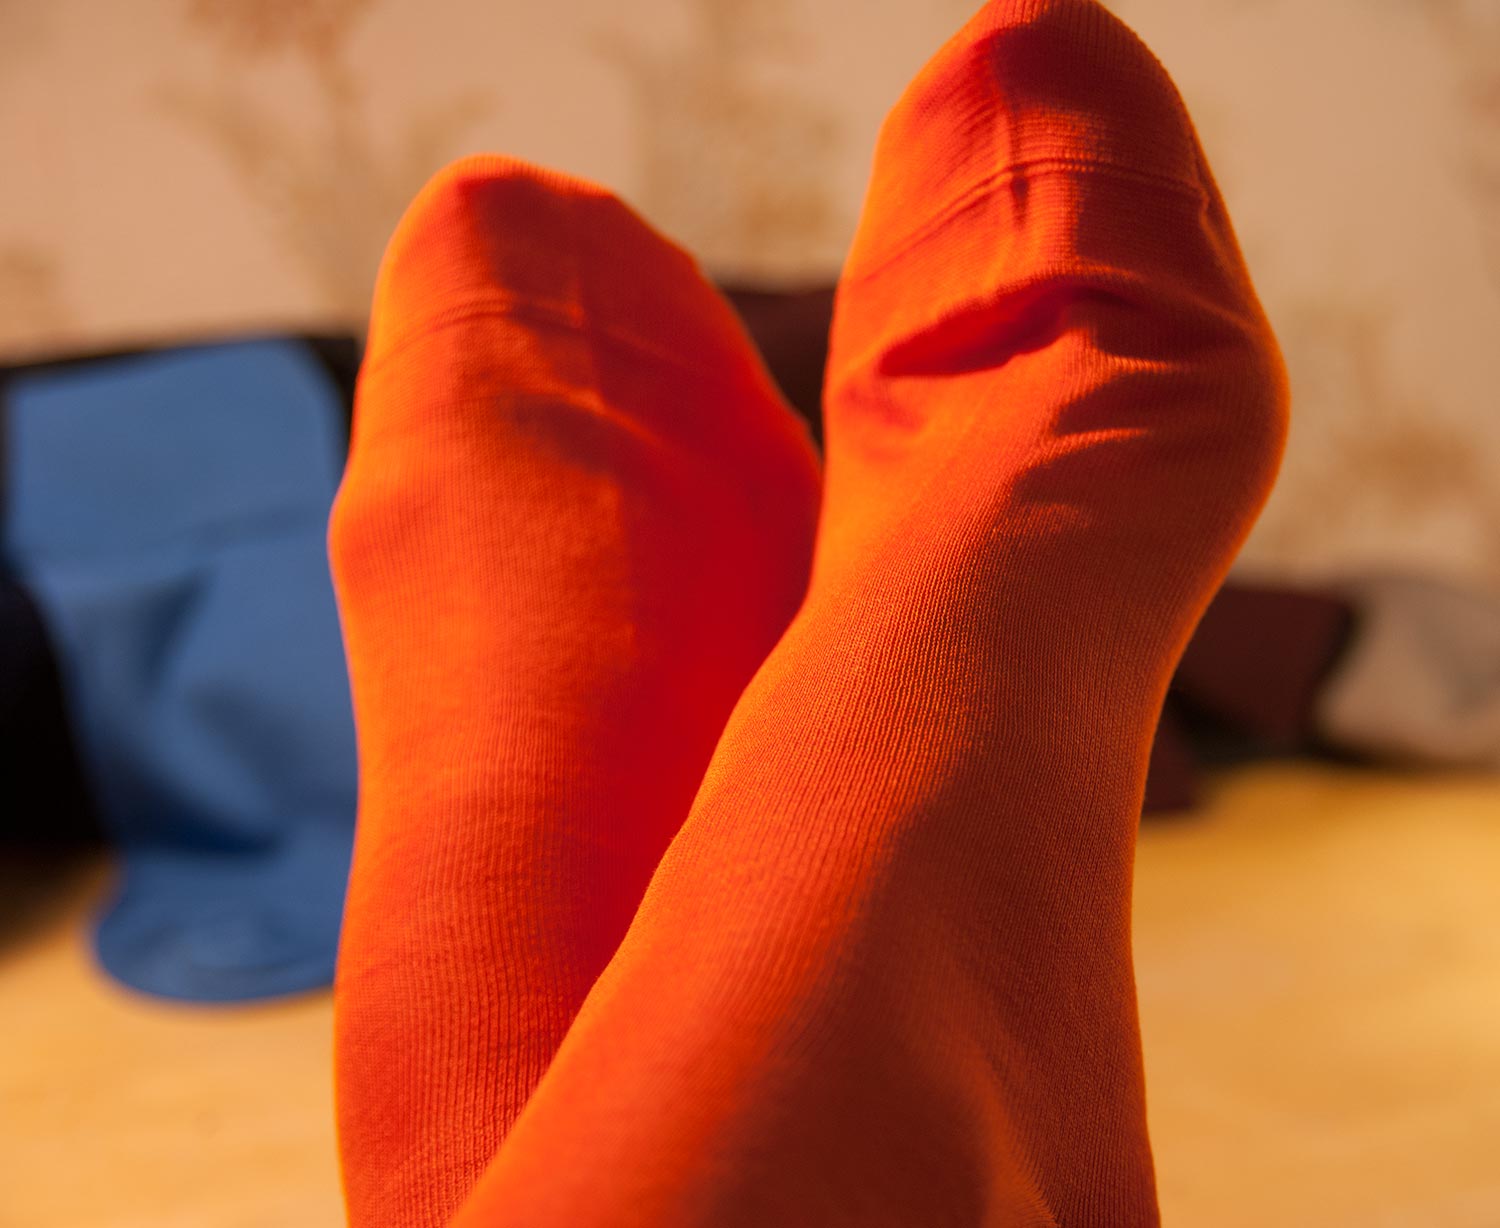 Фильдекосовые мужские носки Philippe Matignon. Фото: bracatuS.com